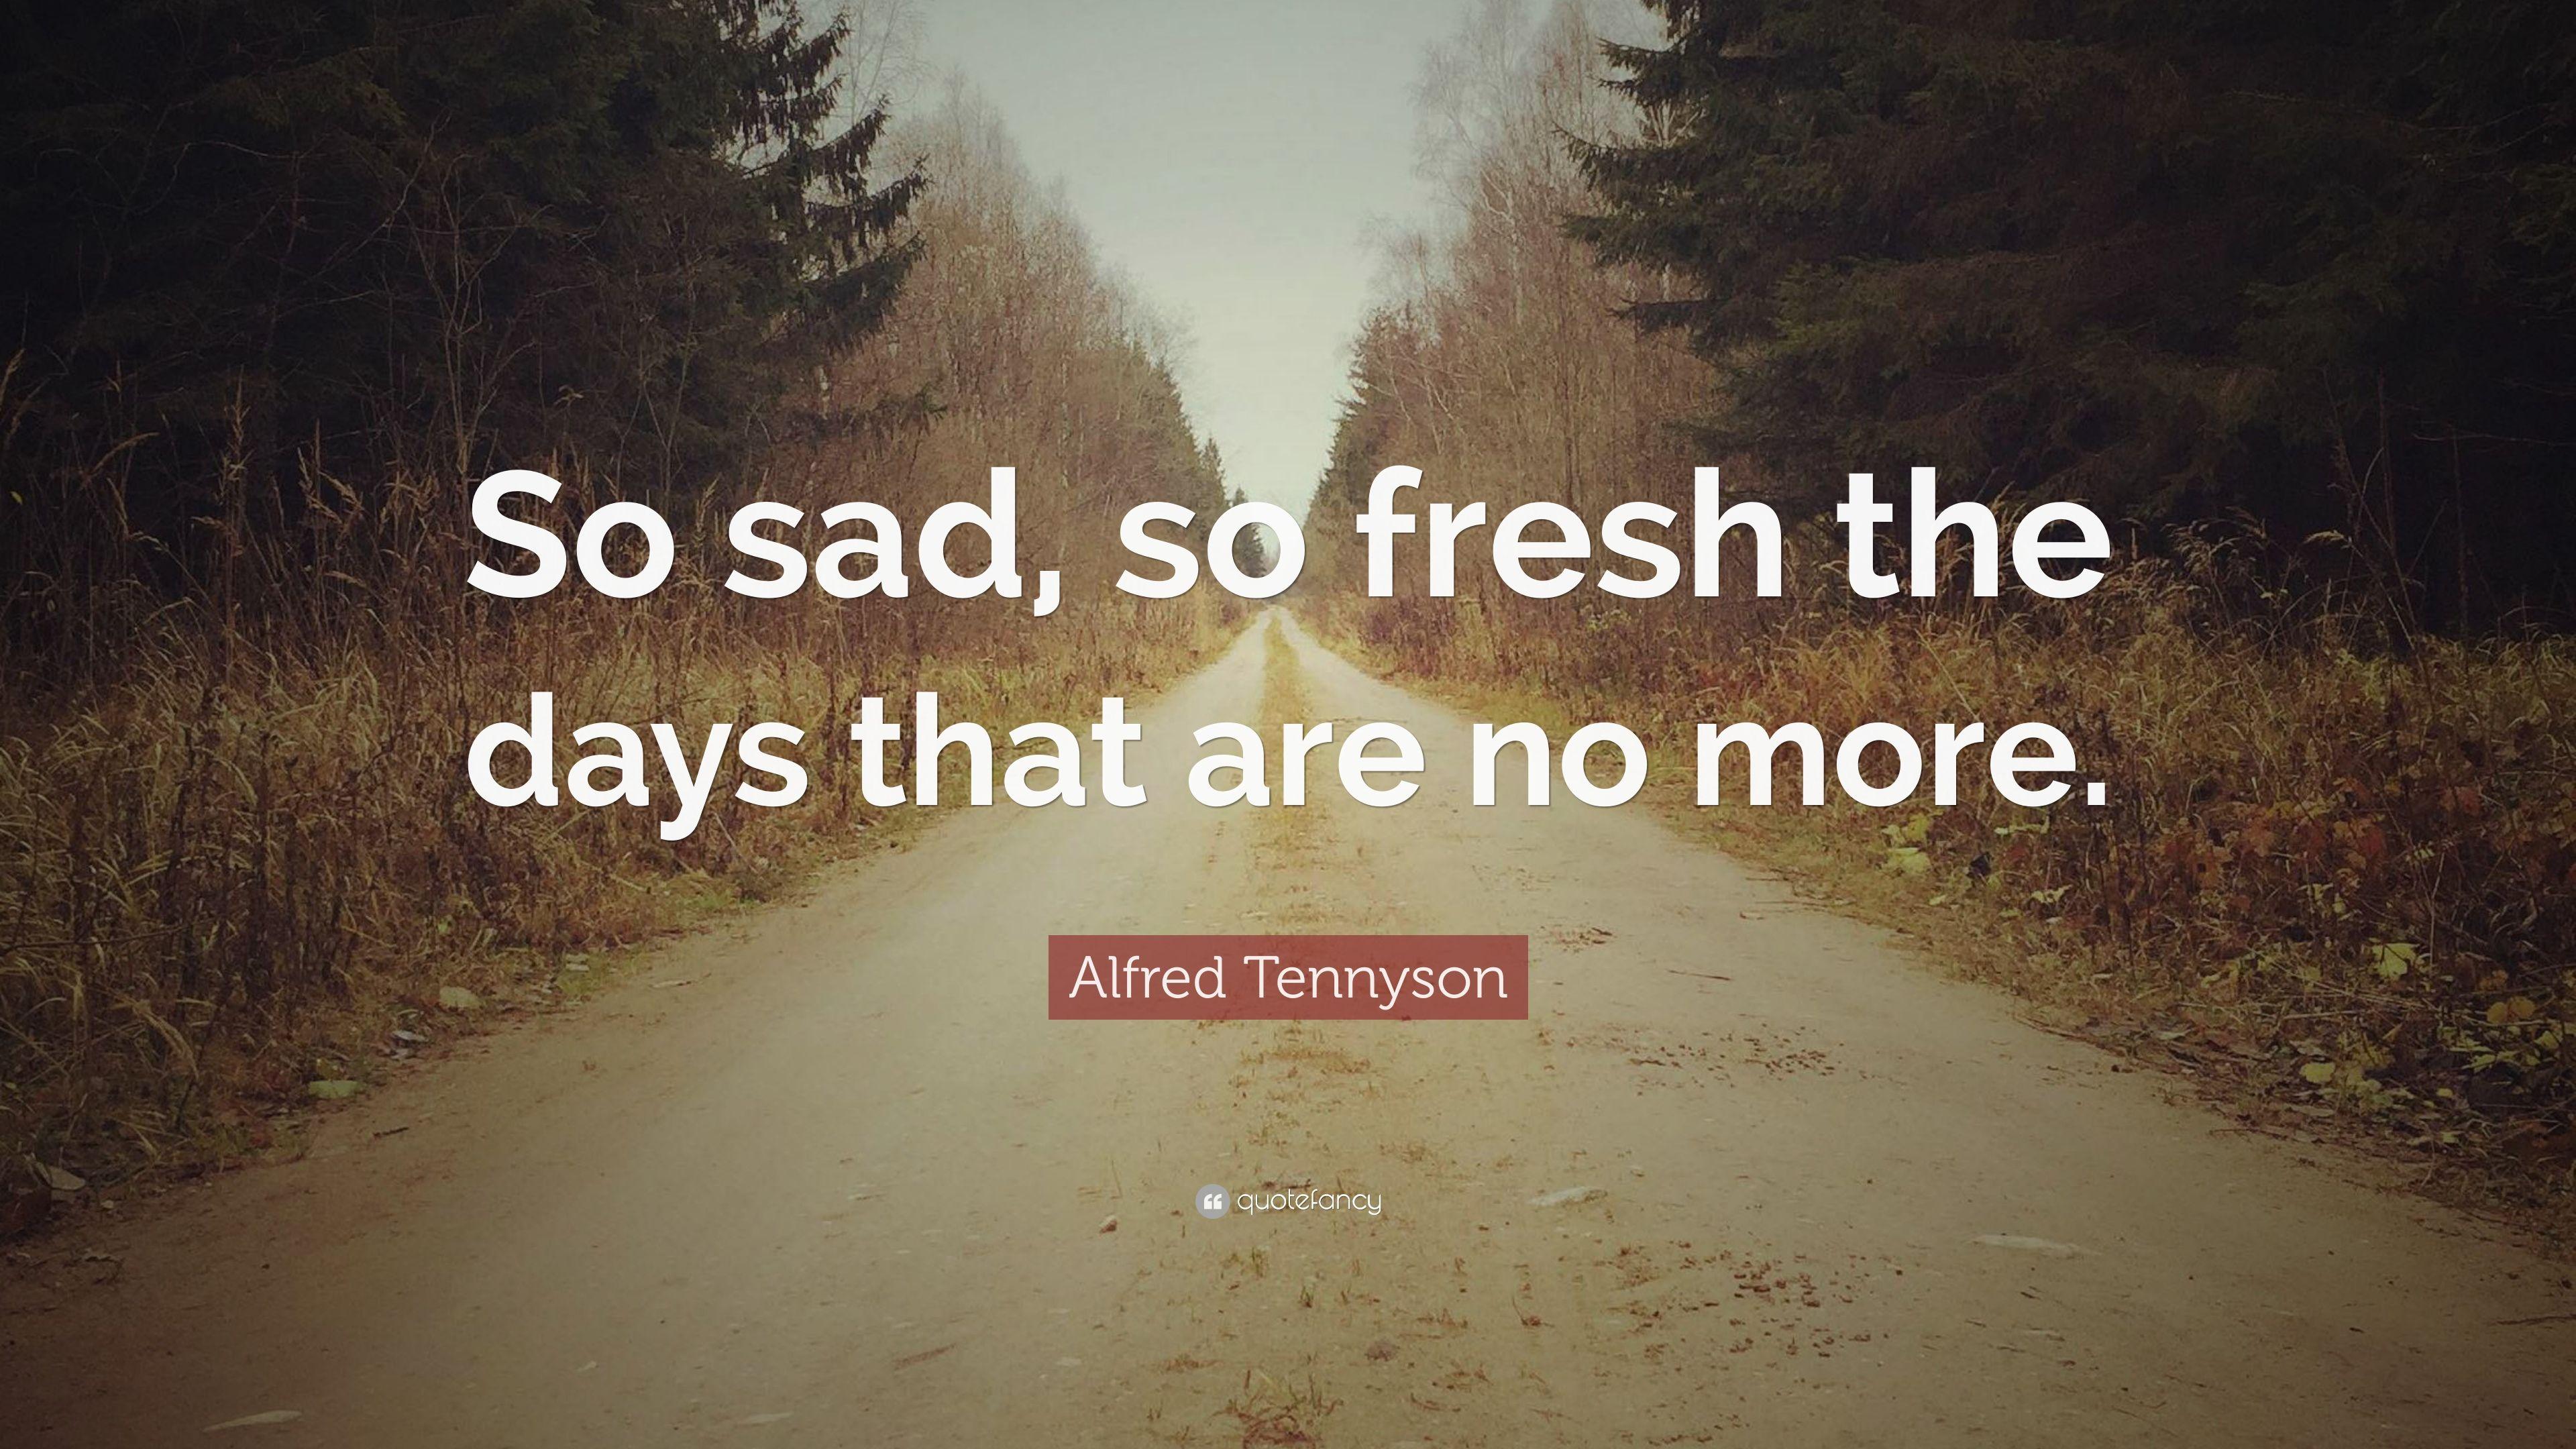 Alfred Tennyson Quote: “So sad, so fresh the days that are no more